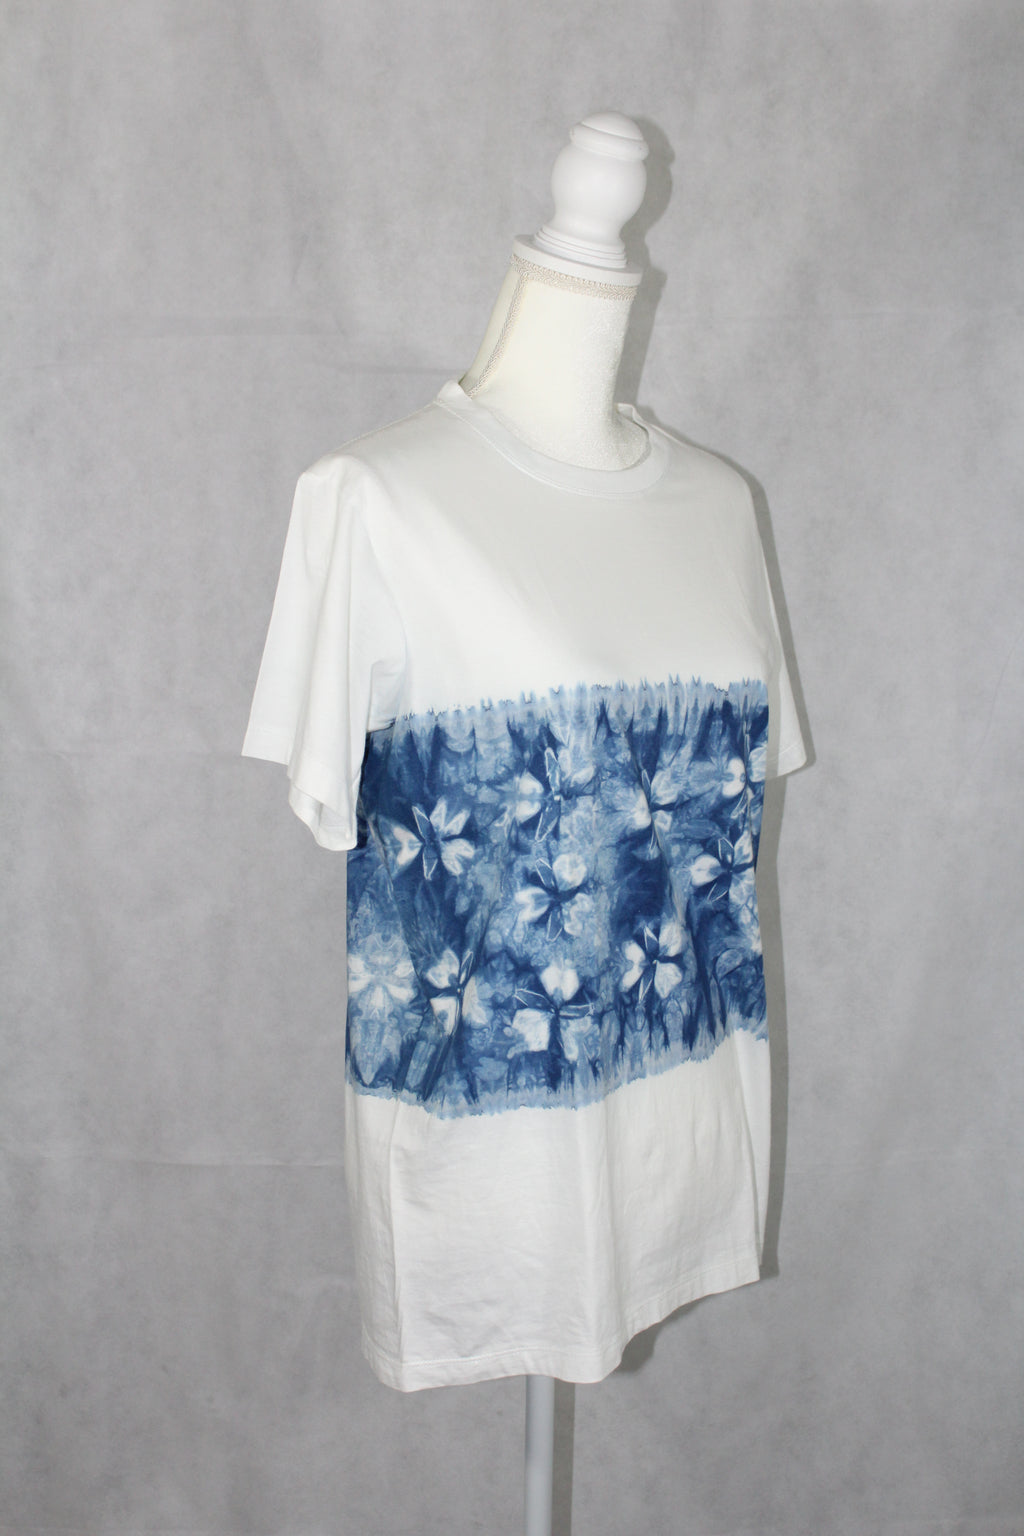 Indigo Dye Shirt Top Cotton Handmade Natural